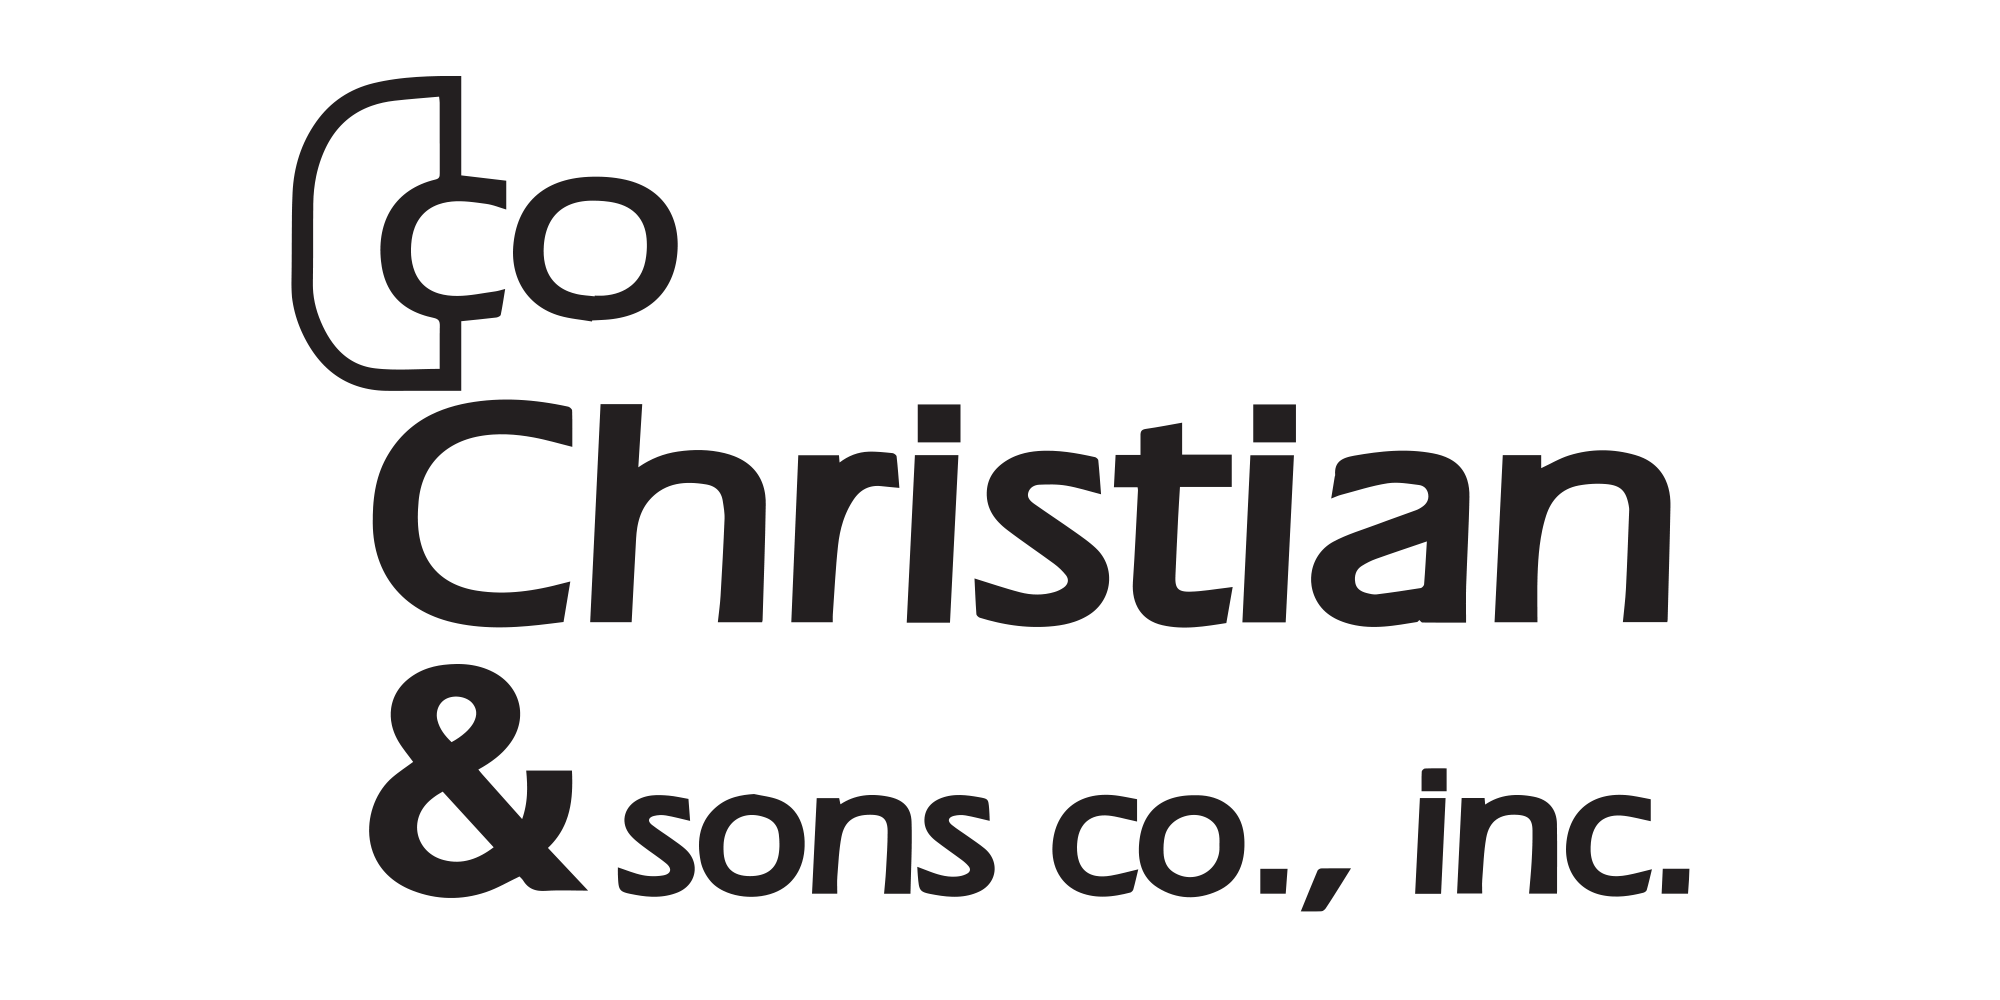 C.O. CHRISTIAN & SONS LOGO